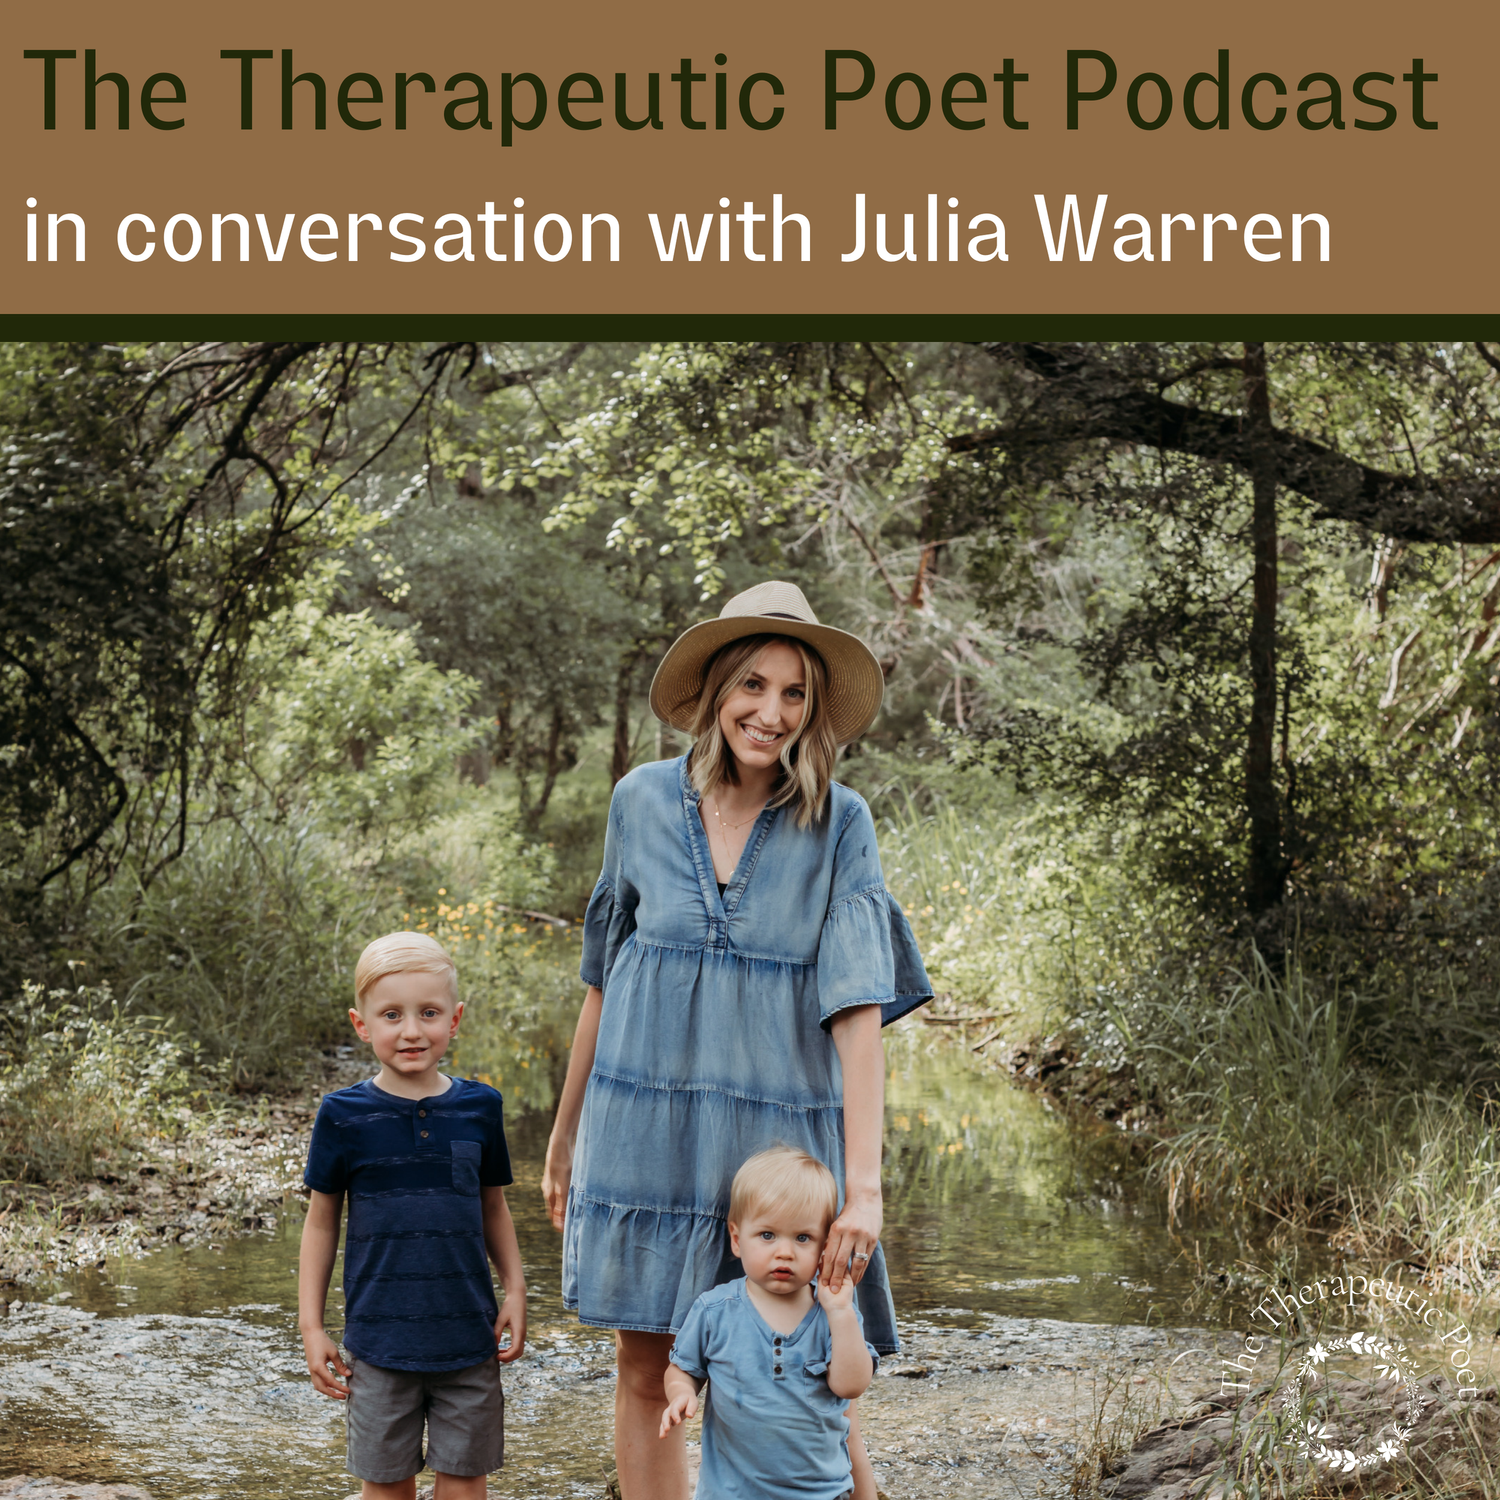 In conversation with Julia Warren about bereavement through overdose